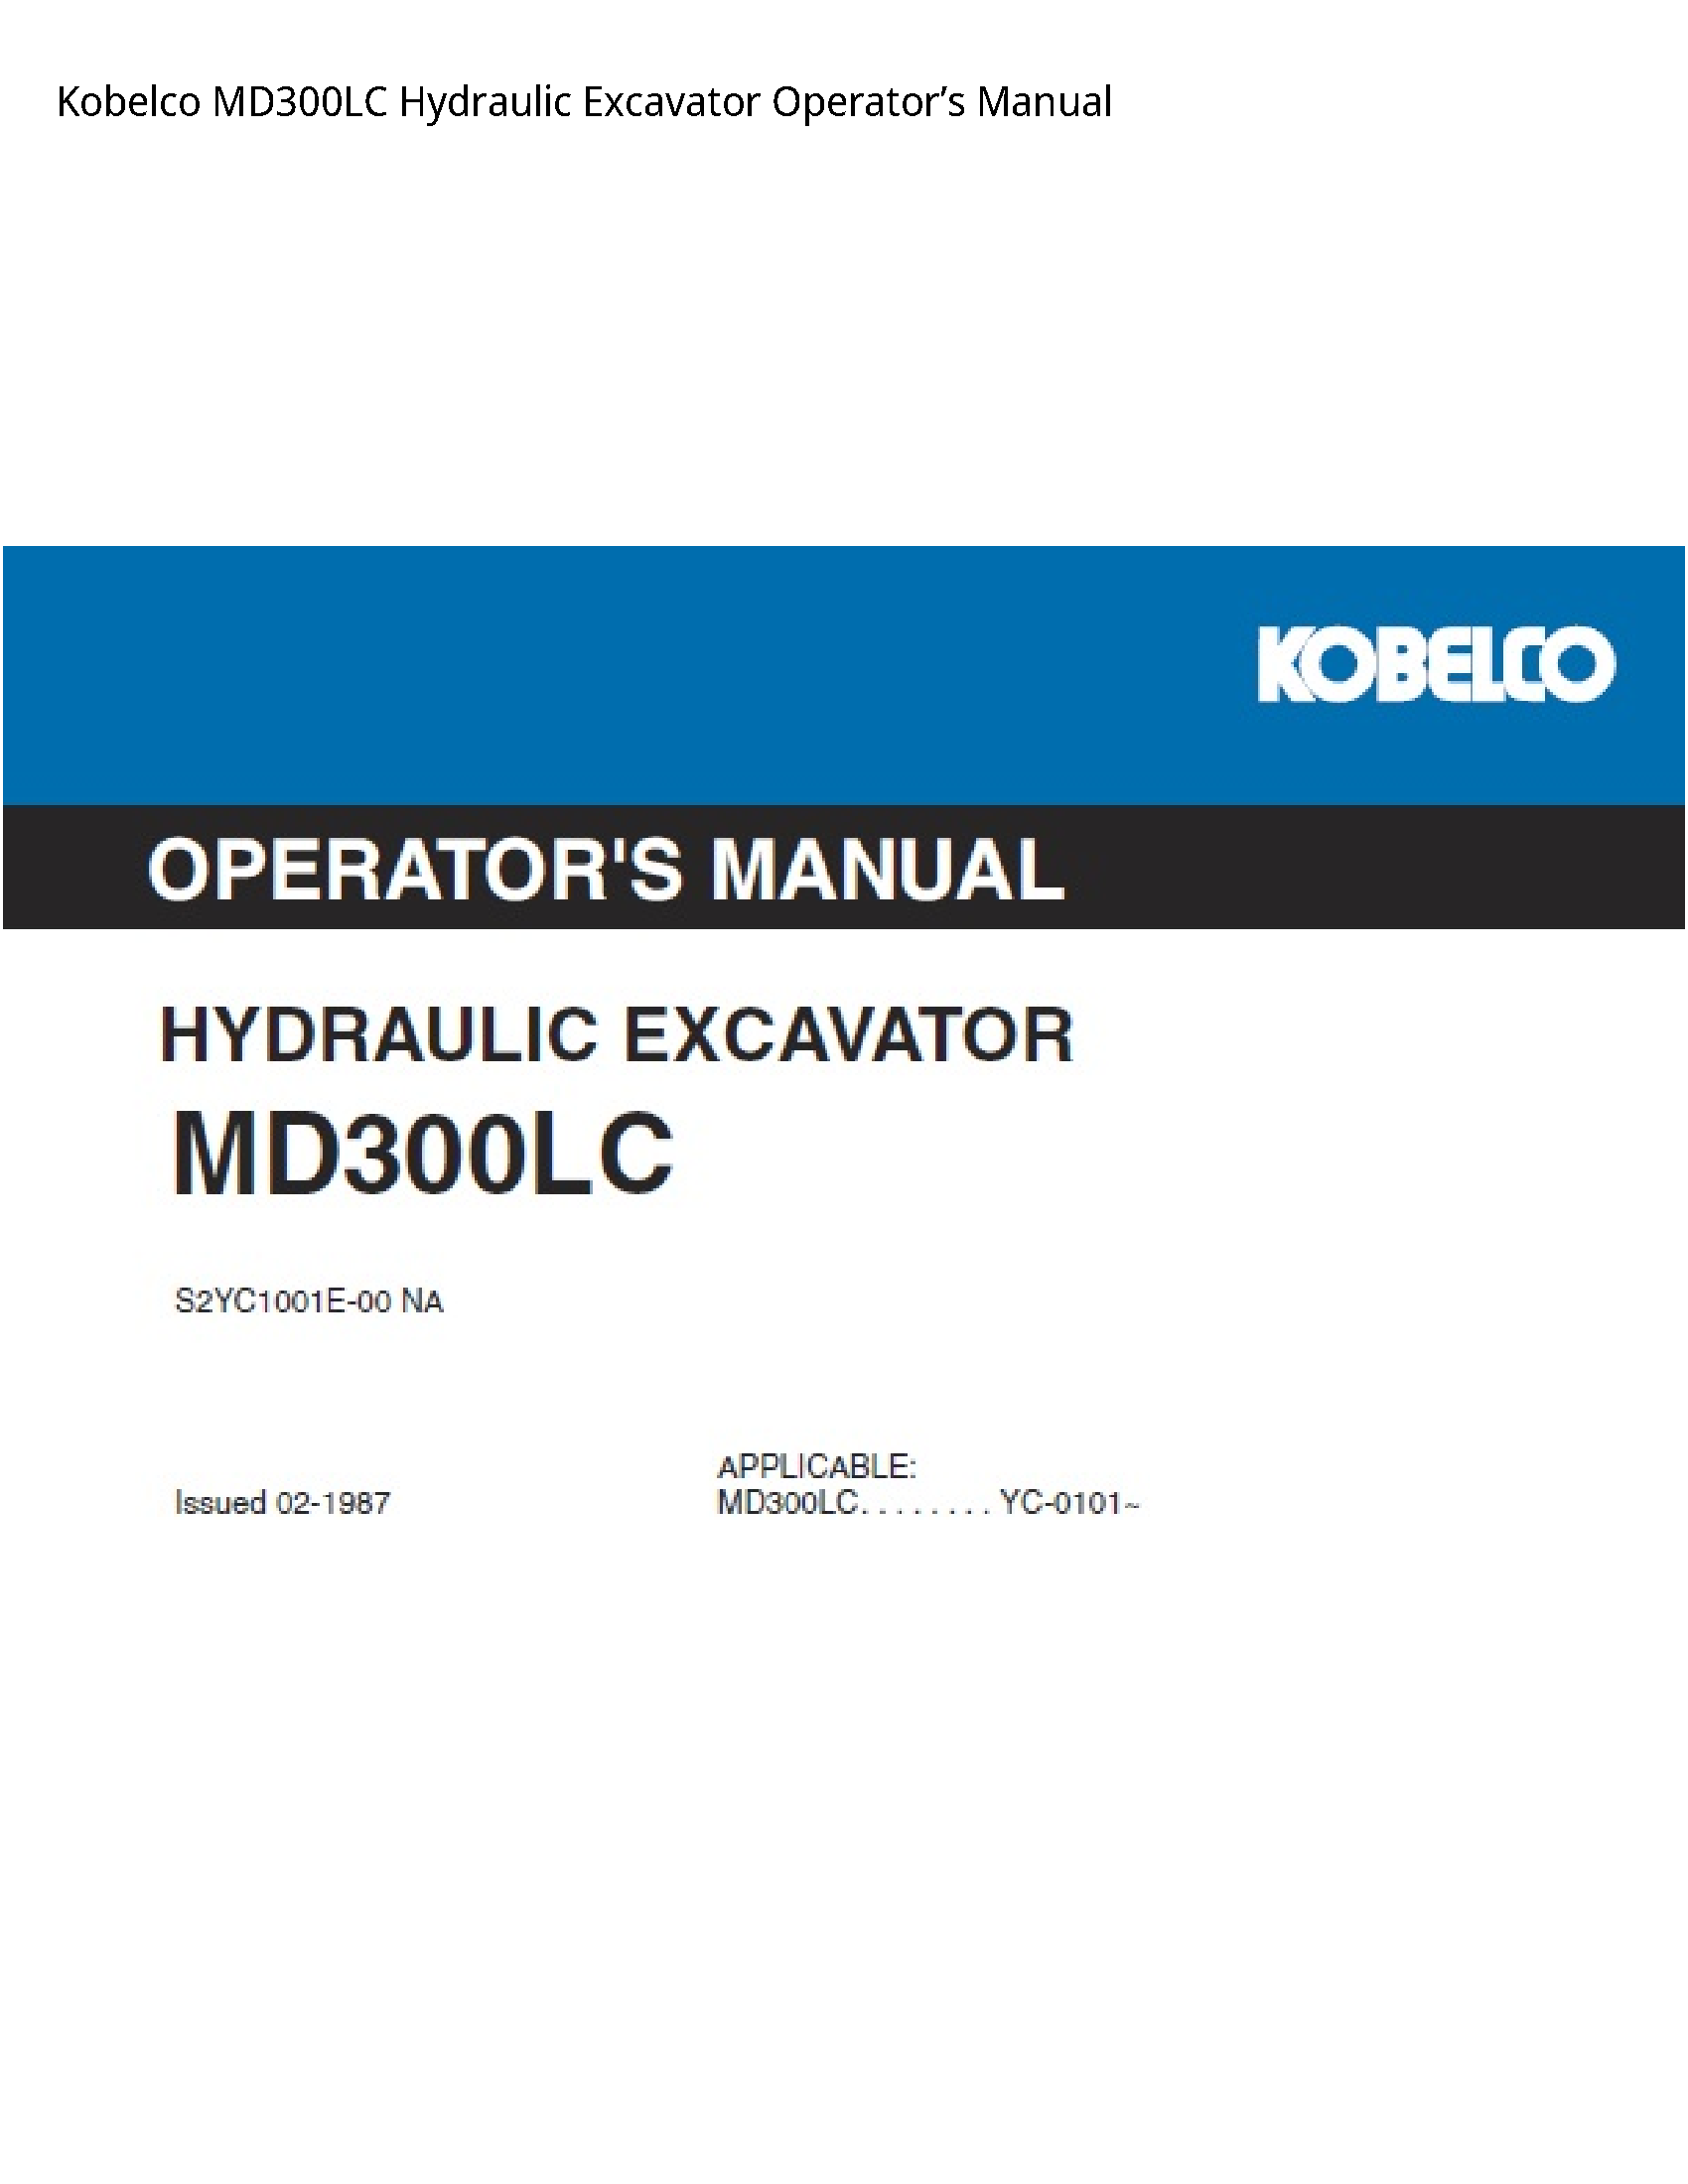 Kobelco MD300LC Hydraulic Excavator Operator’s manual